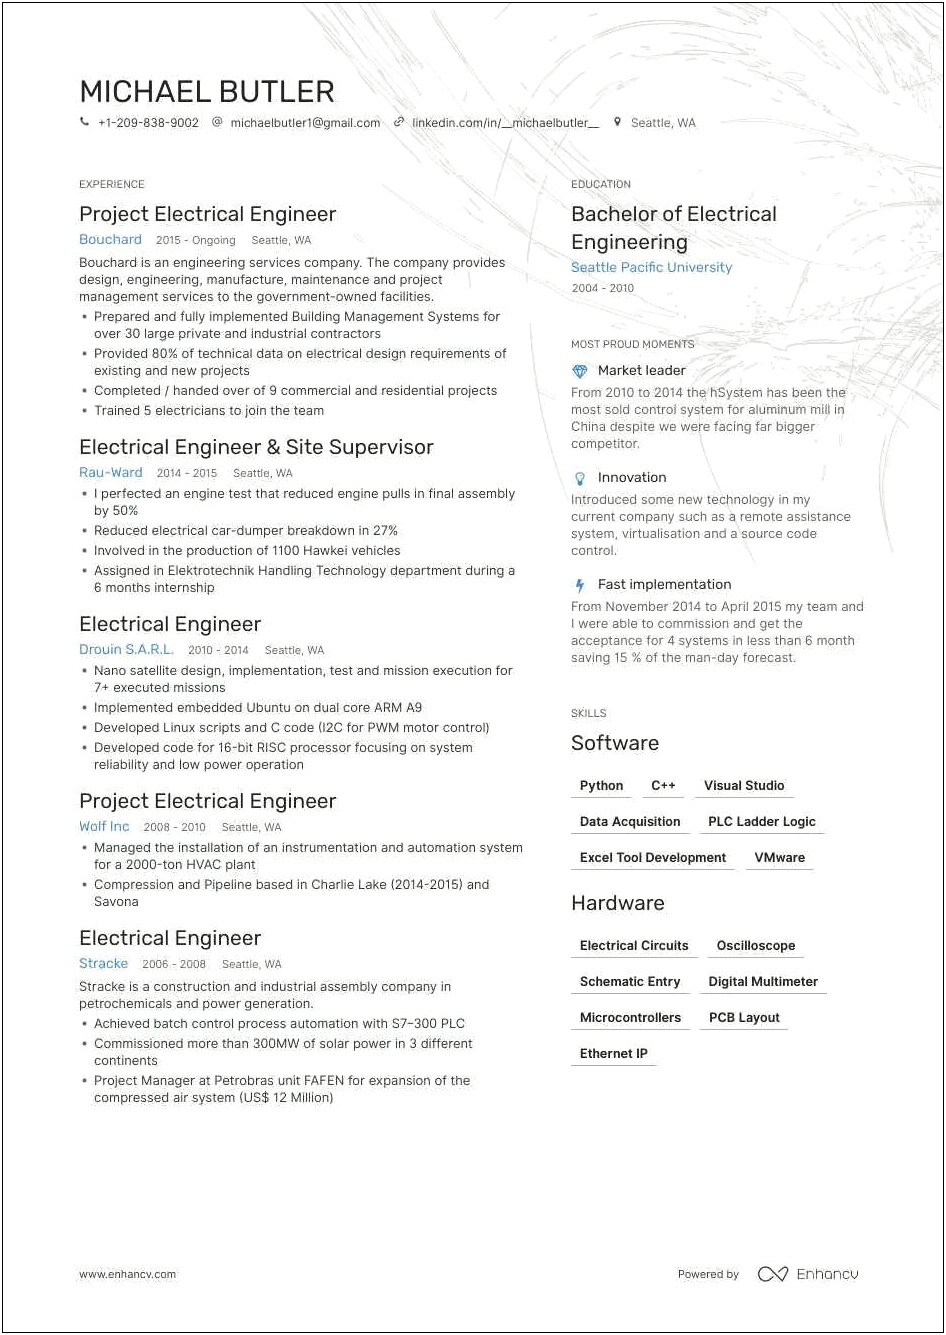 Resume Job Description For Engineer